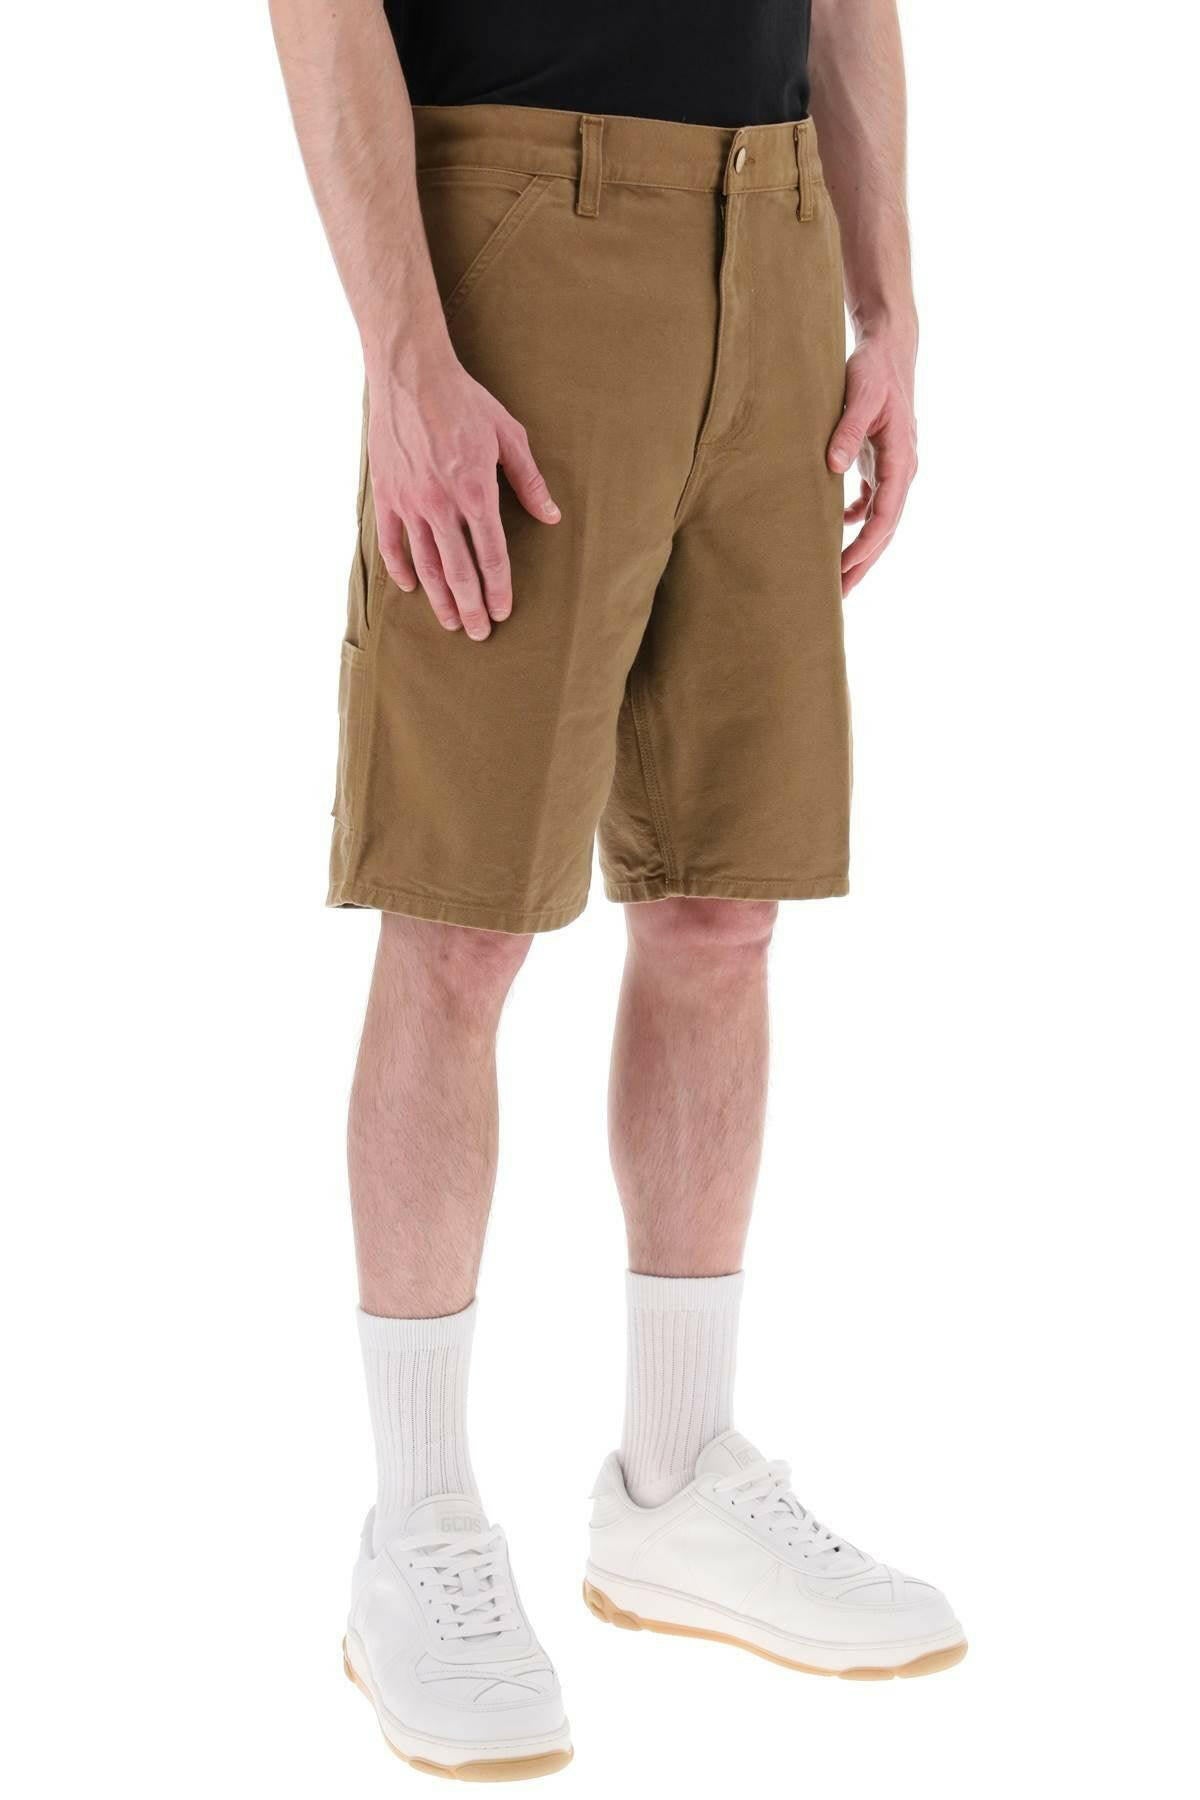 Carhartt Wip Organic Cotton Shorts - JOHN JULIA